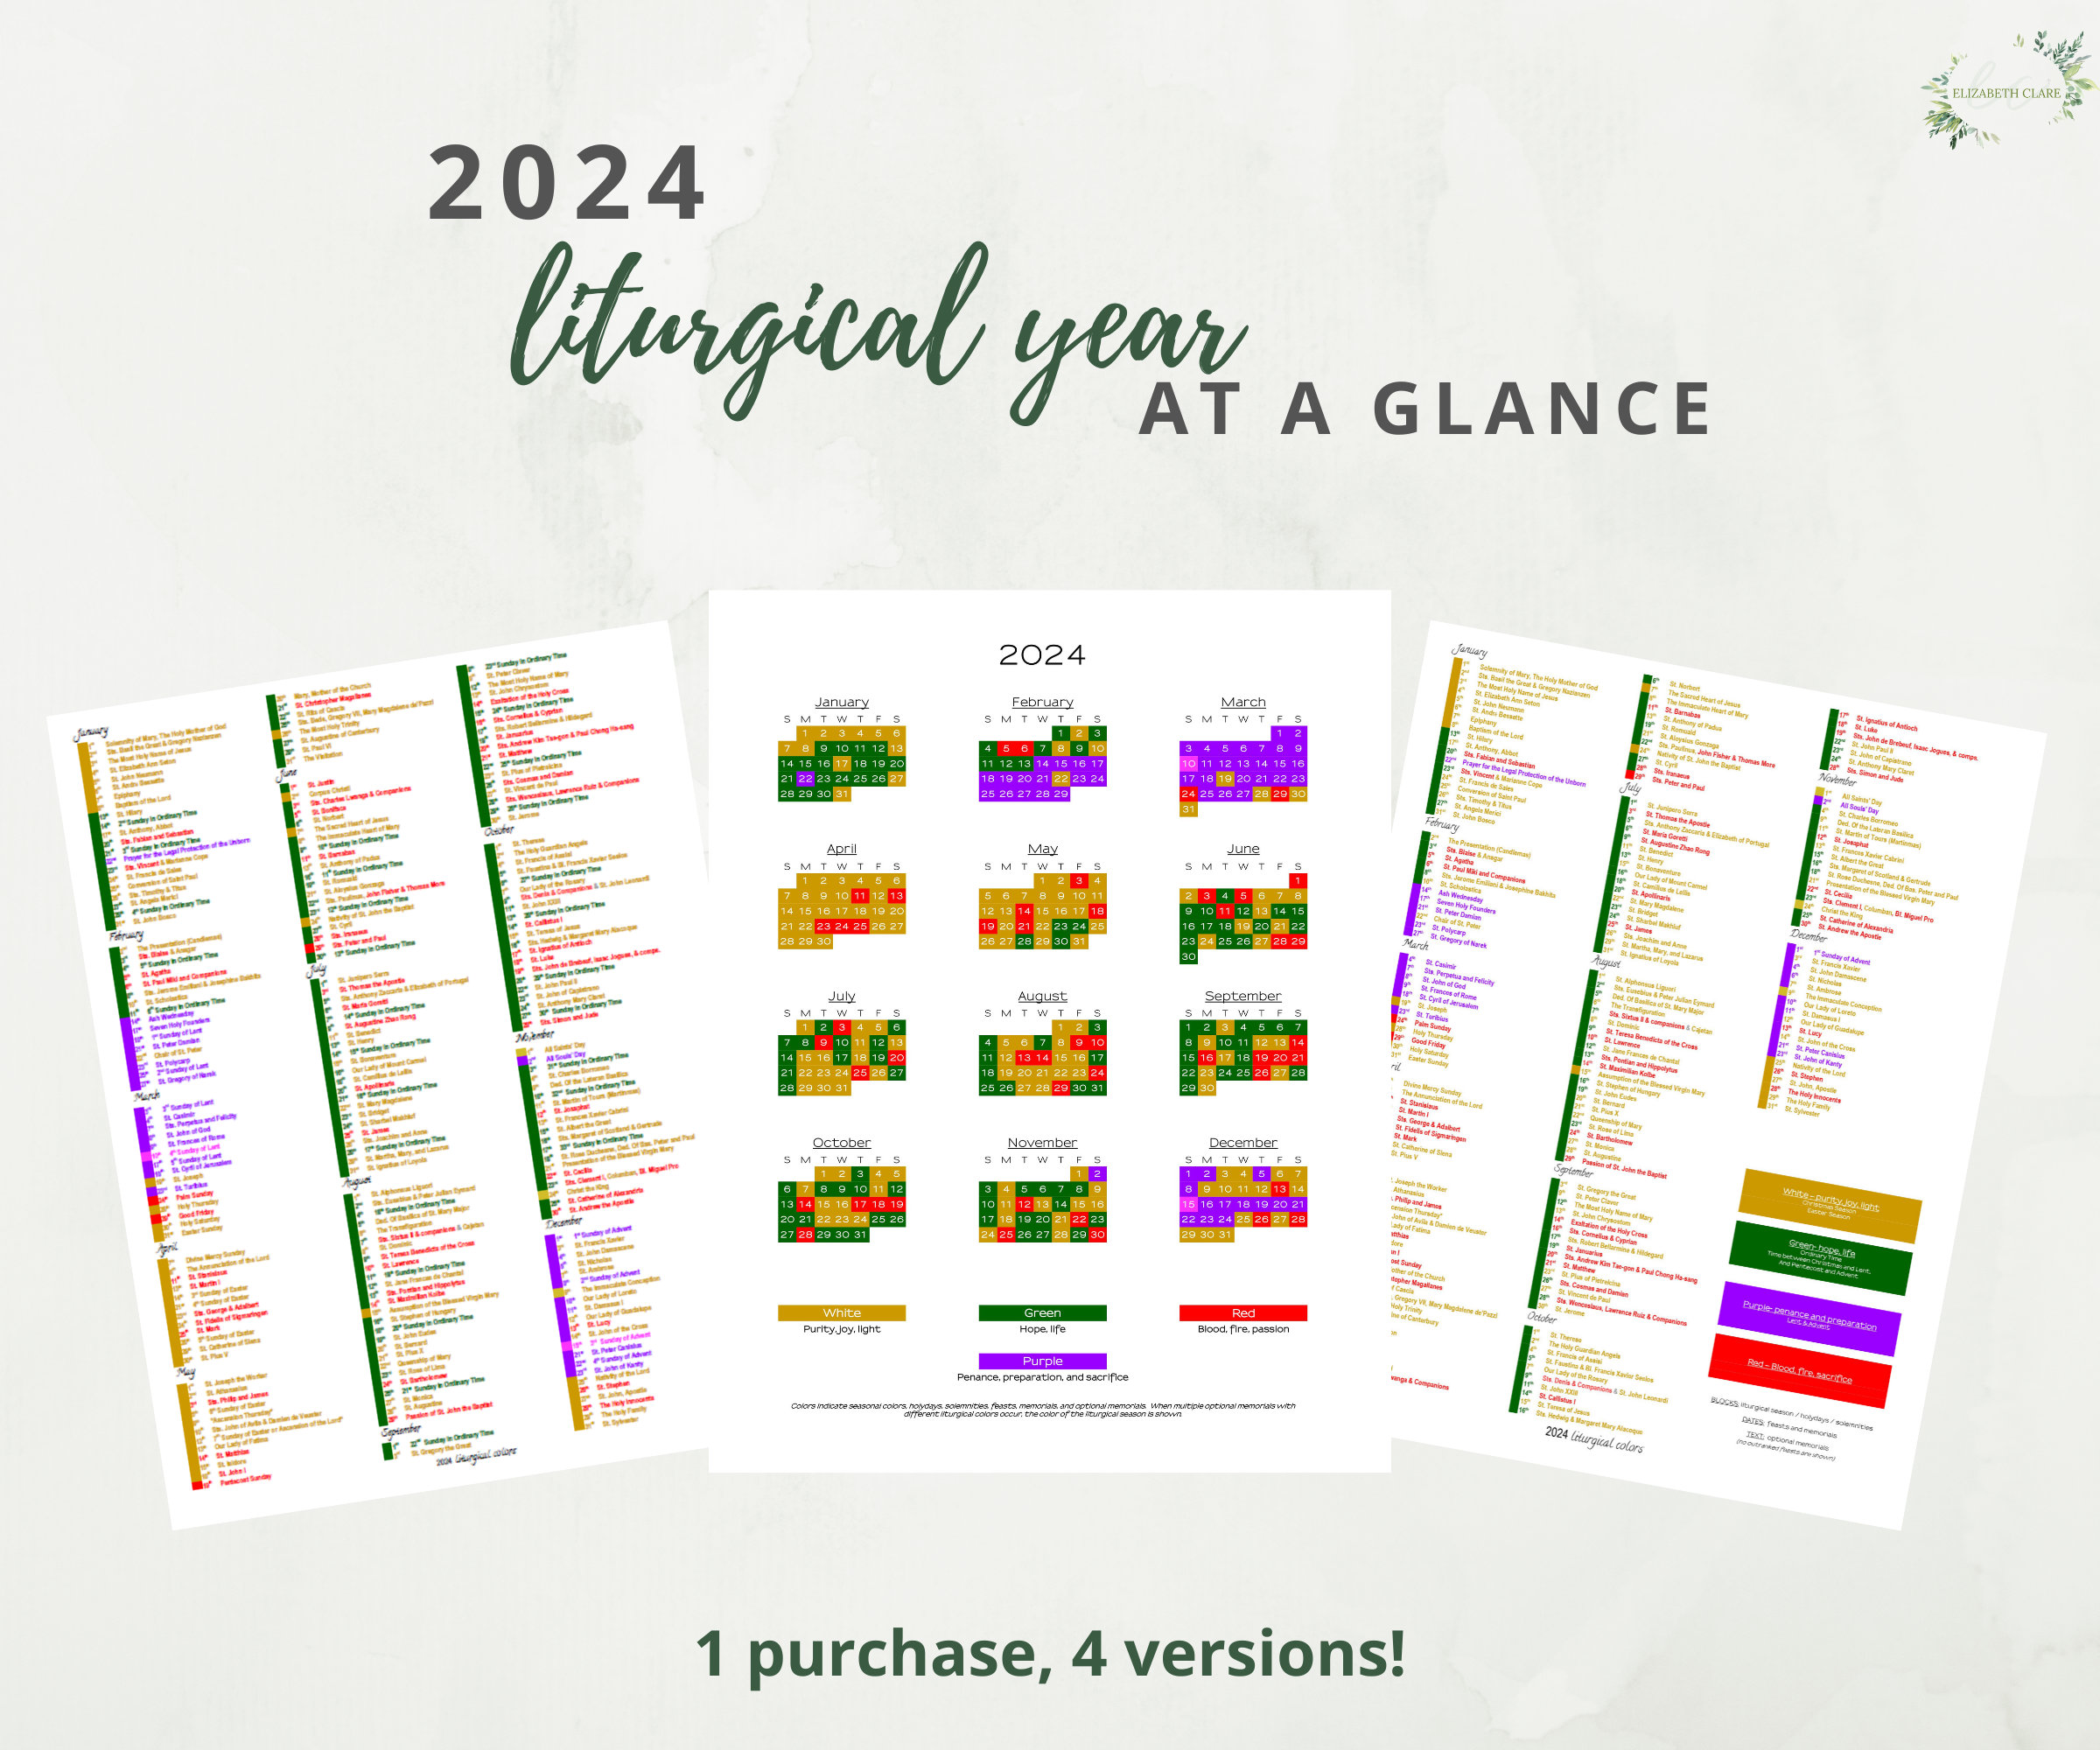 2024 Catholic Liturgical Calendar Year at a Glance: Liturgical Colors Guide  -  Israel